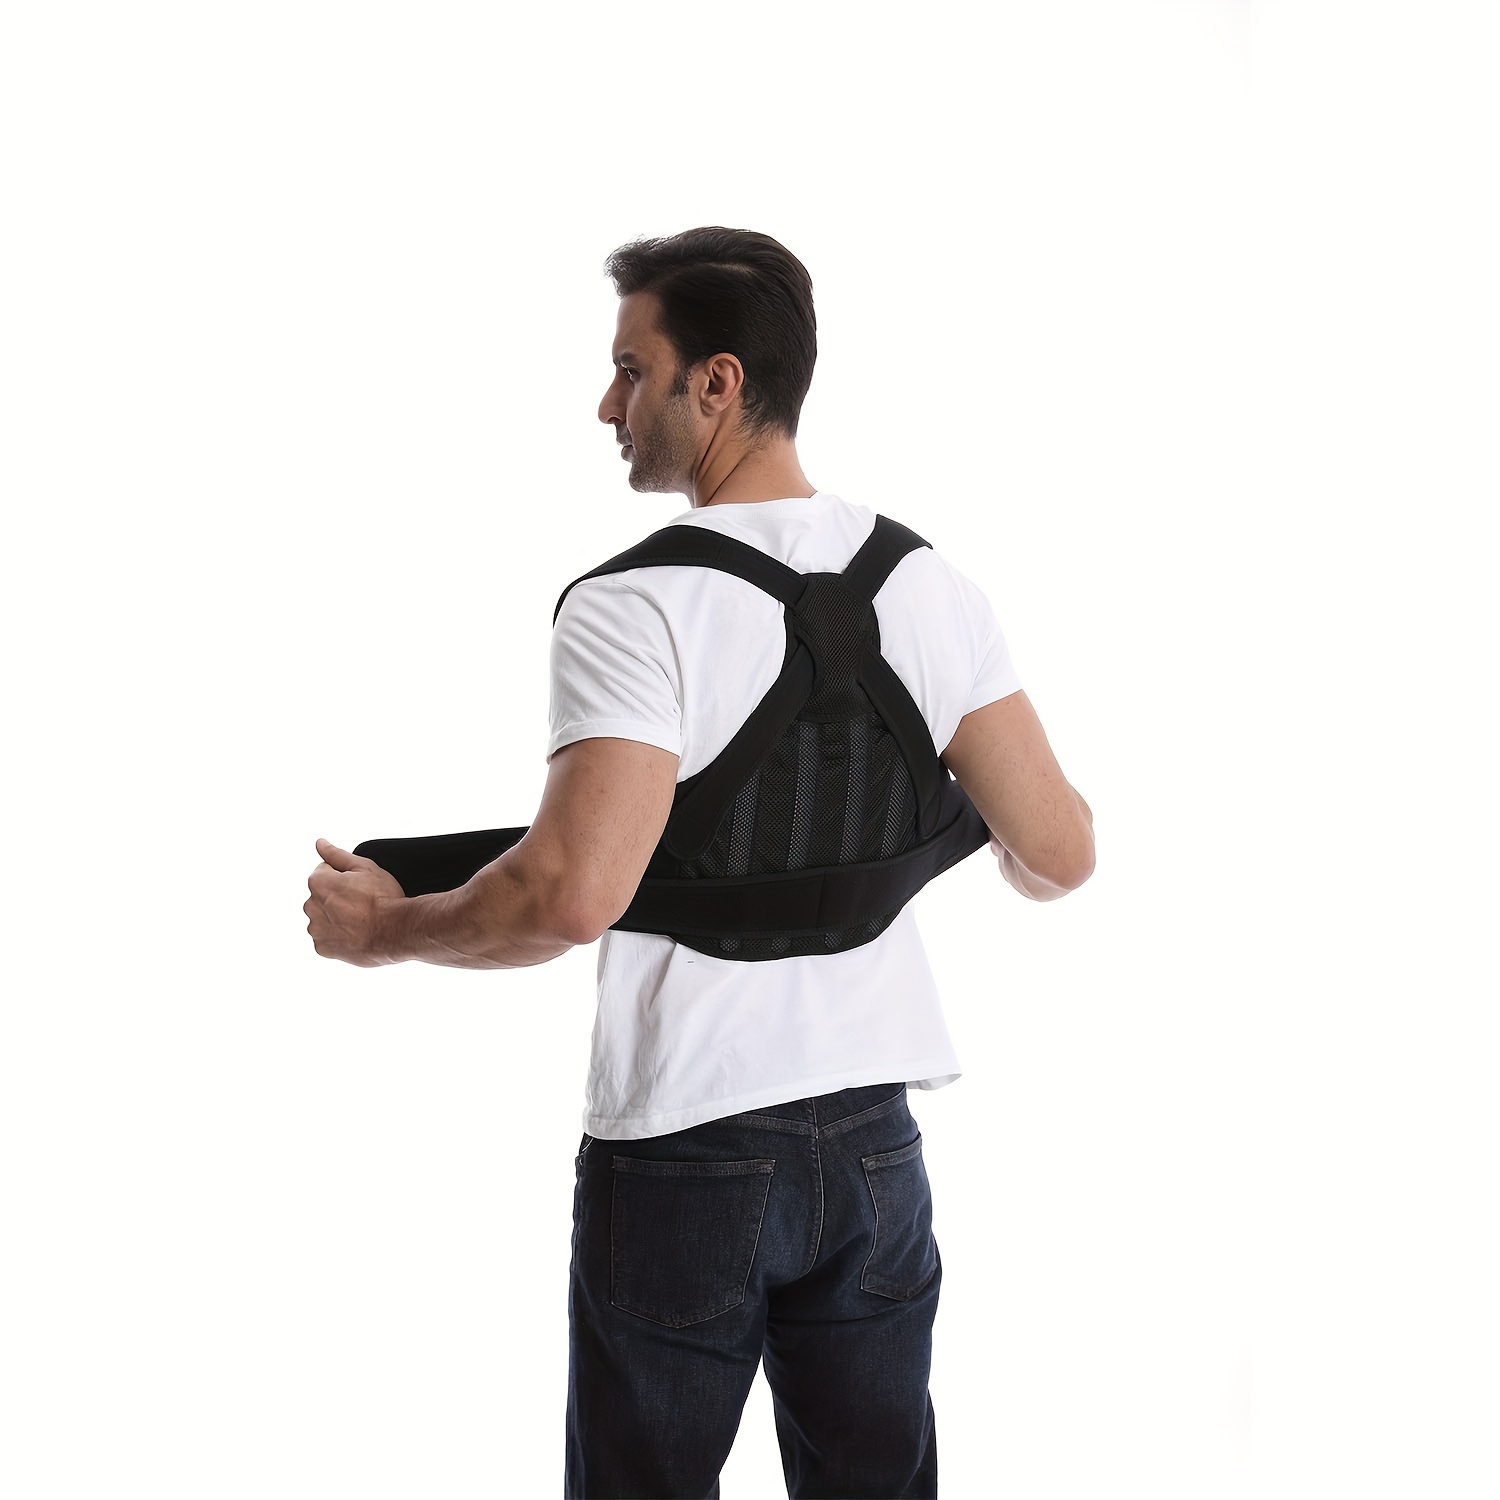 Body posture corrector belt, posture support brace, shoulder support relief  and back pain relief belt - for men and women